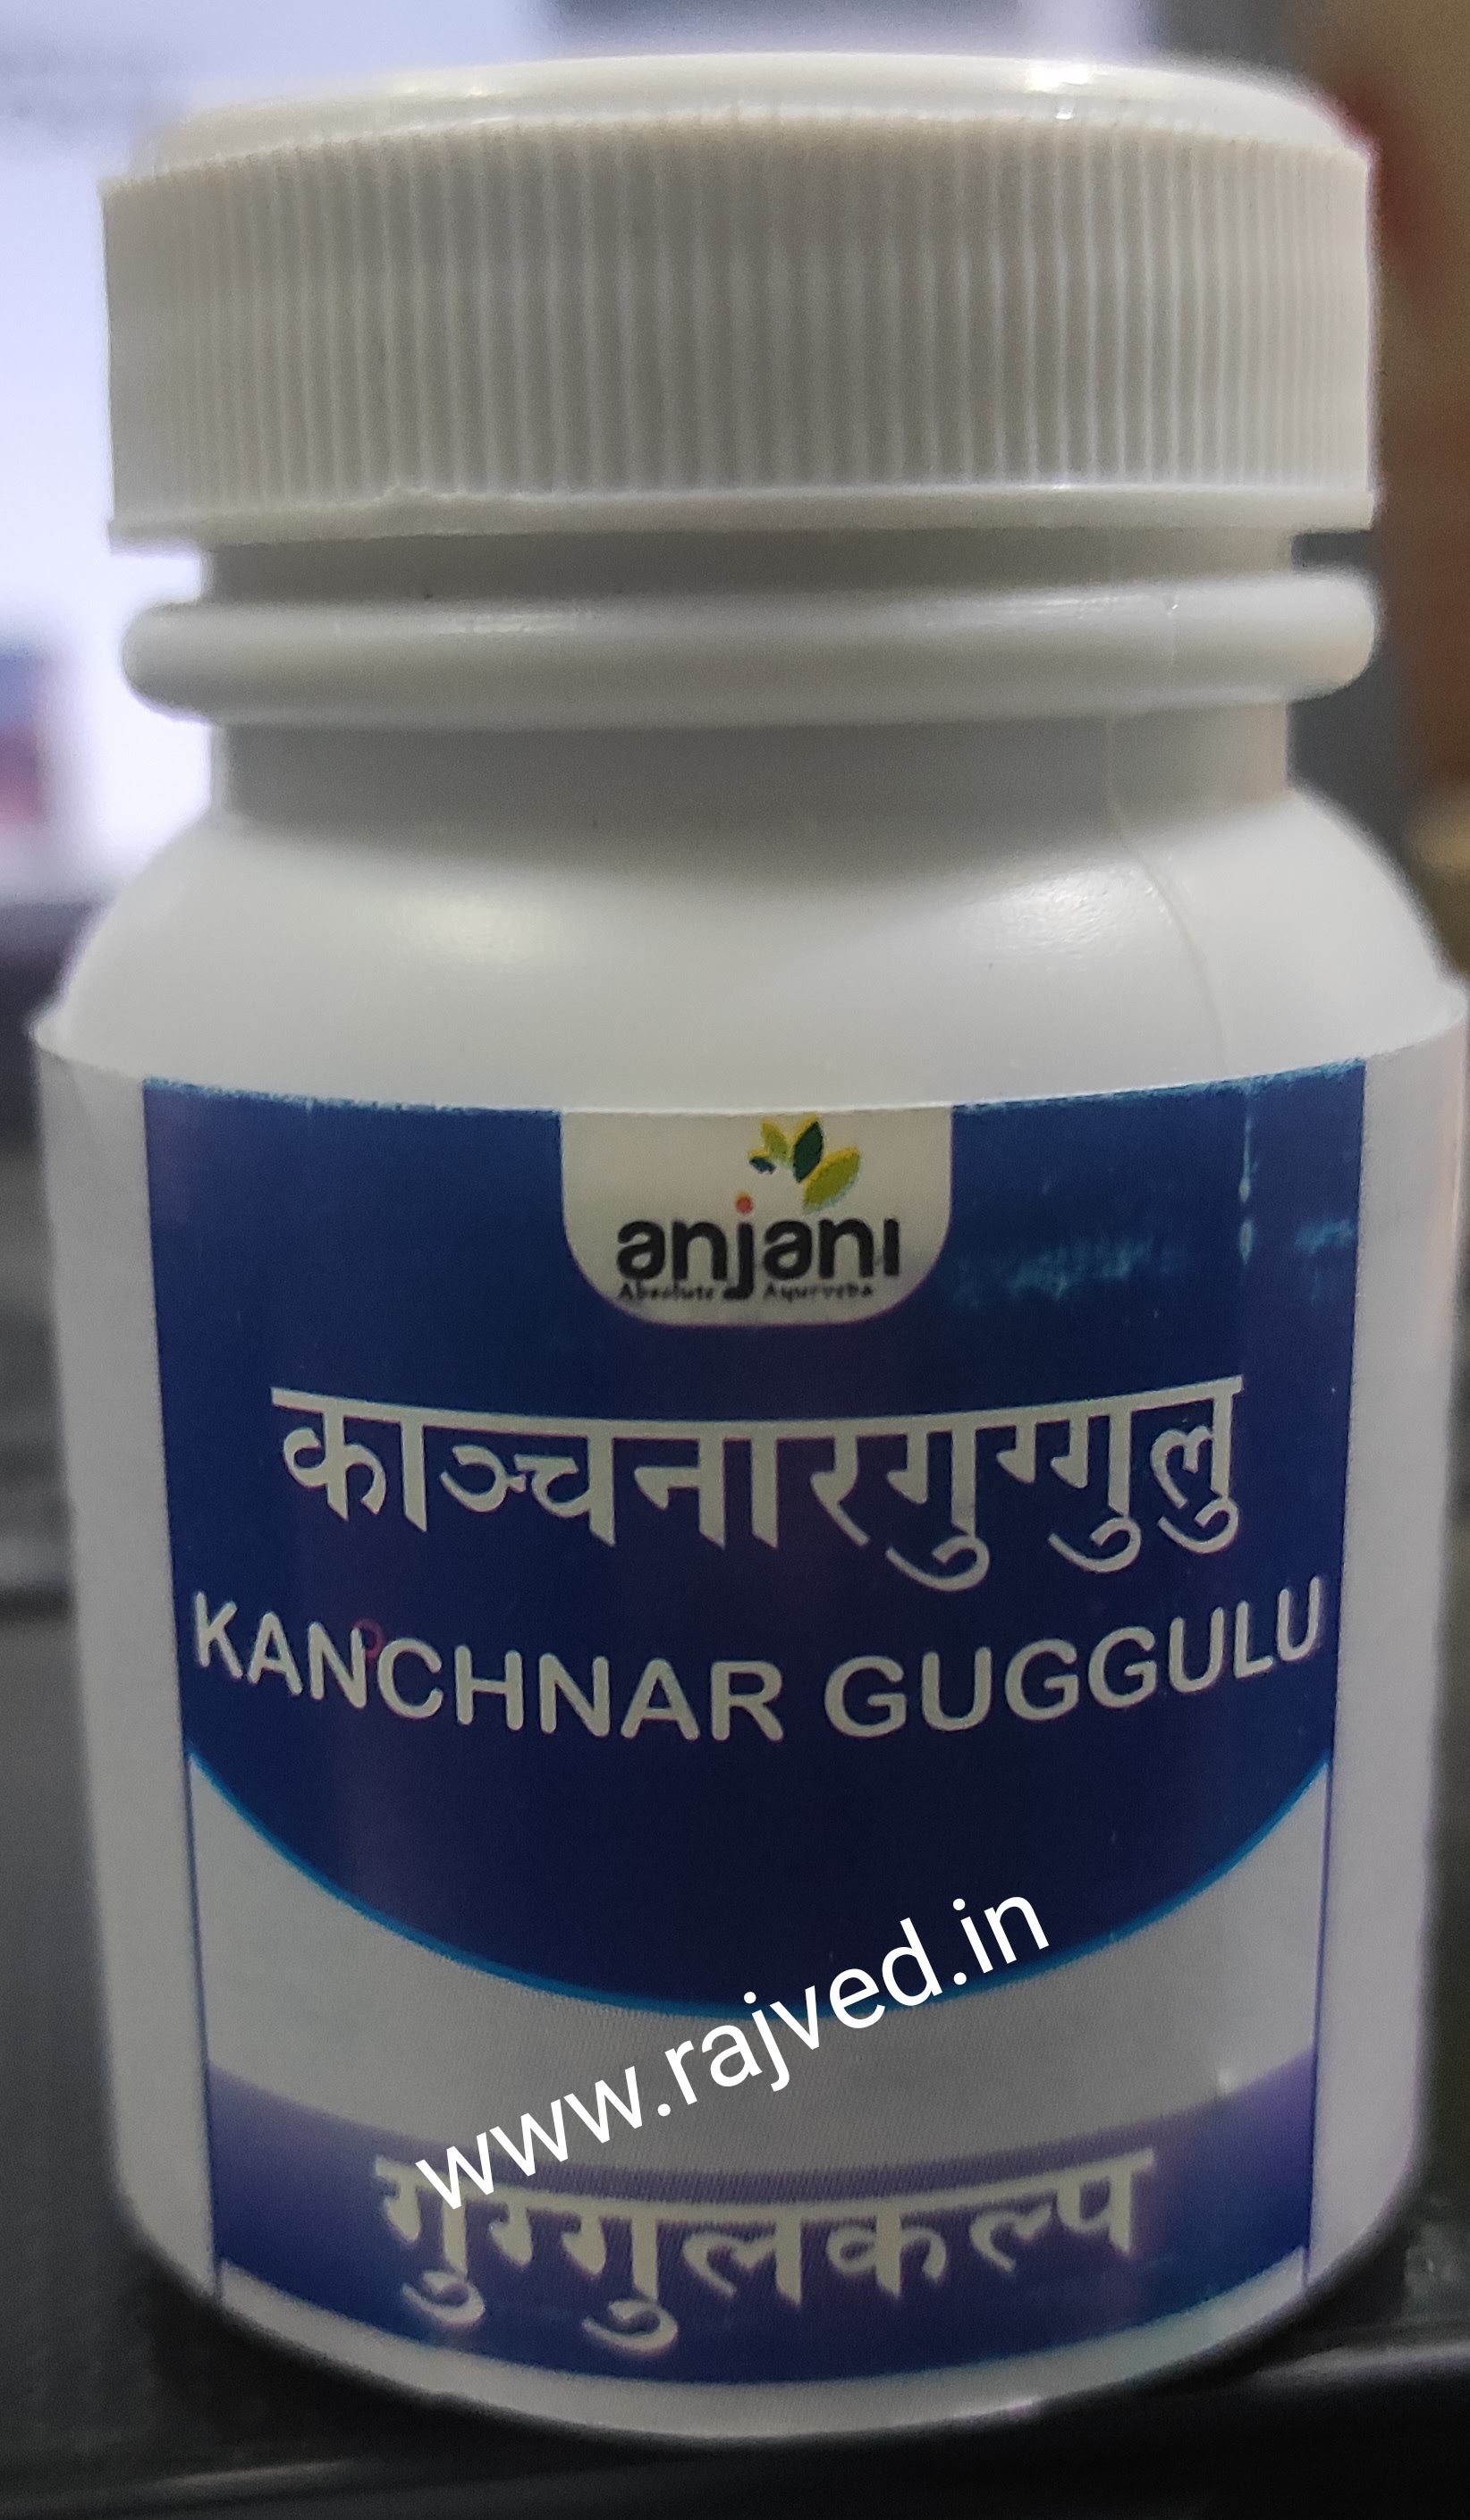 Kanchnar Guggulu 1 kg upto 20% off free shipping anjani pharmaceuticals